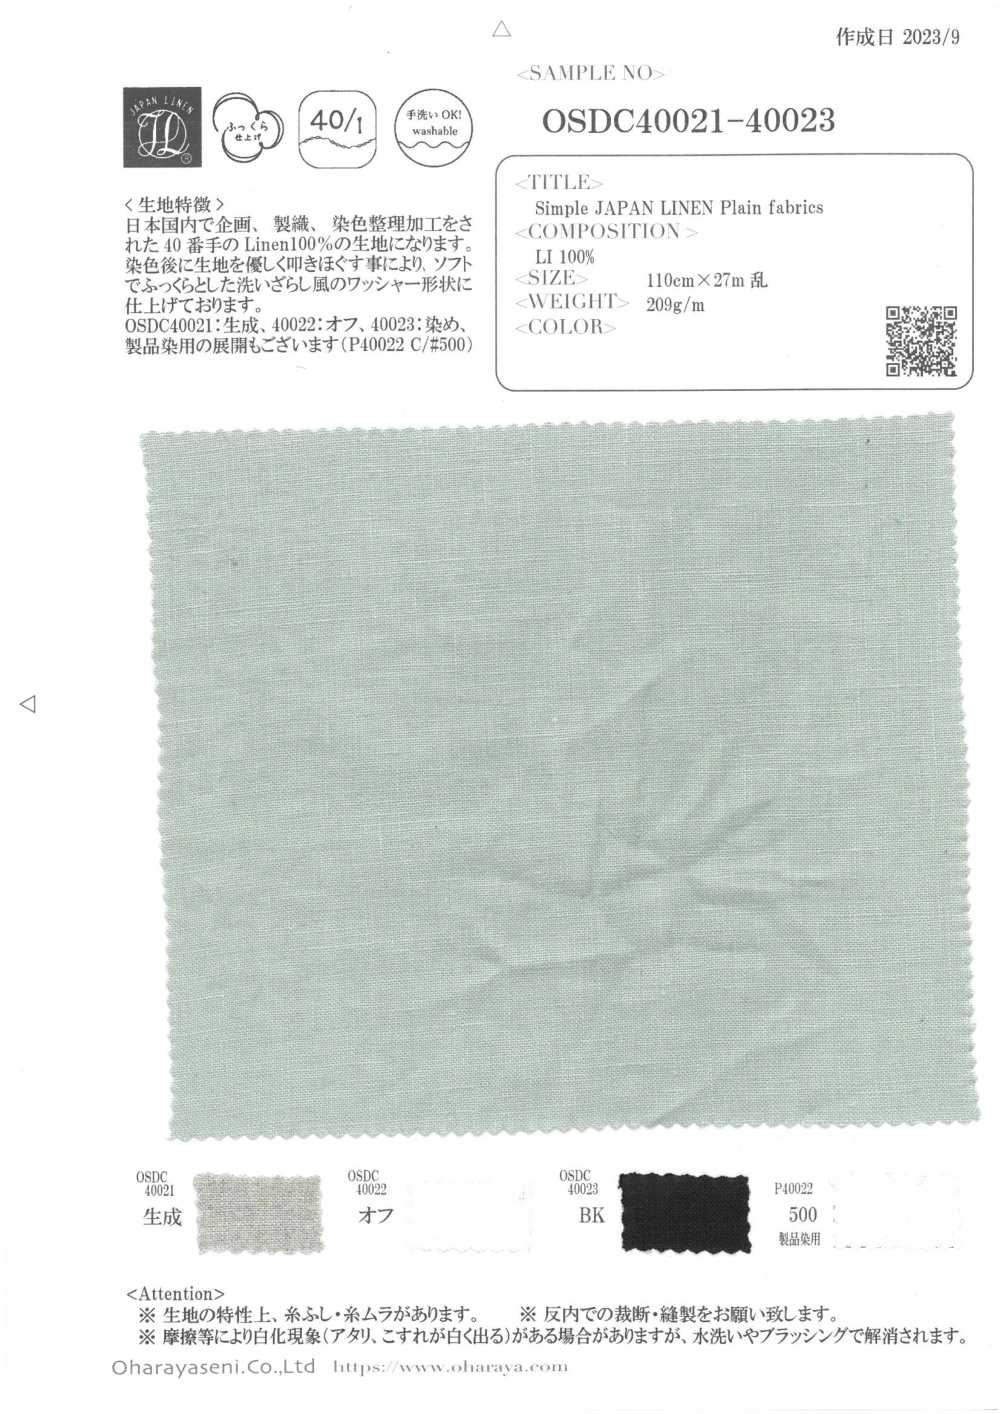 OSDC40022 Simple JAPAN LINEN Plain fabrics (오프)[원단] Oharayaseni